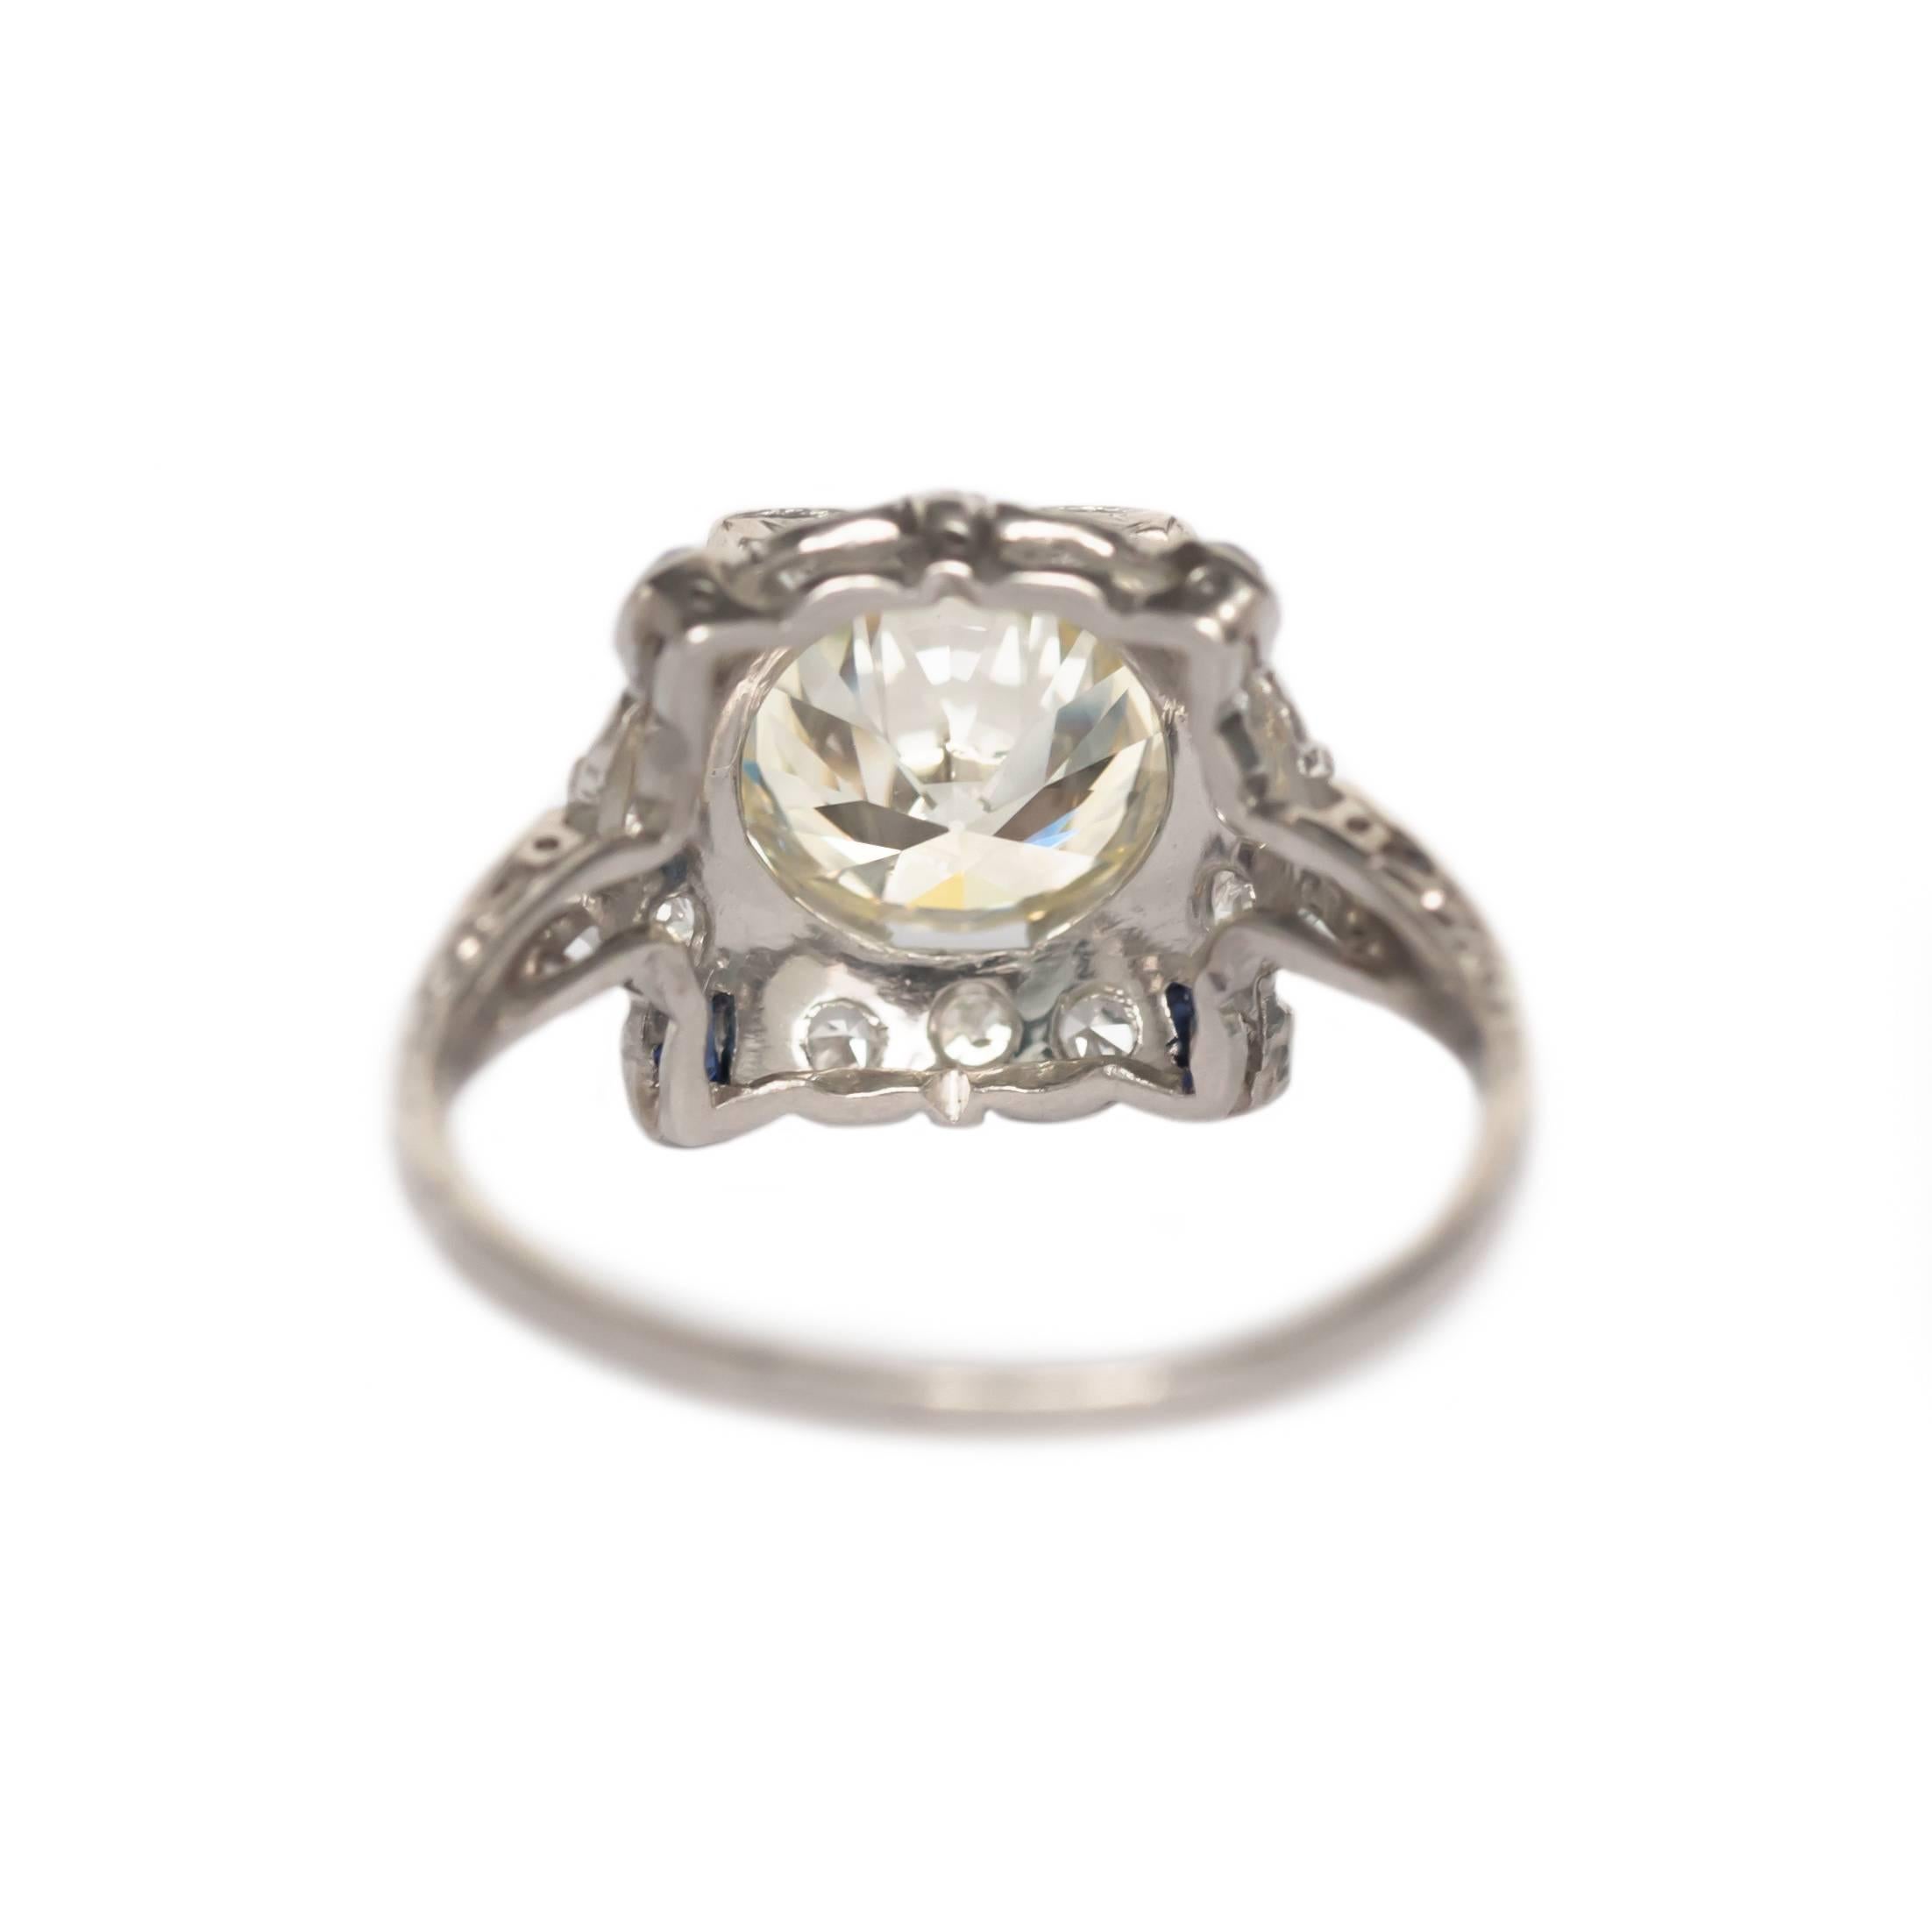 2.25 carat diamond engagement ring